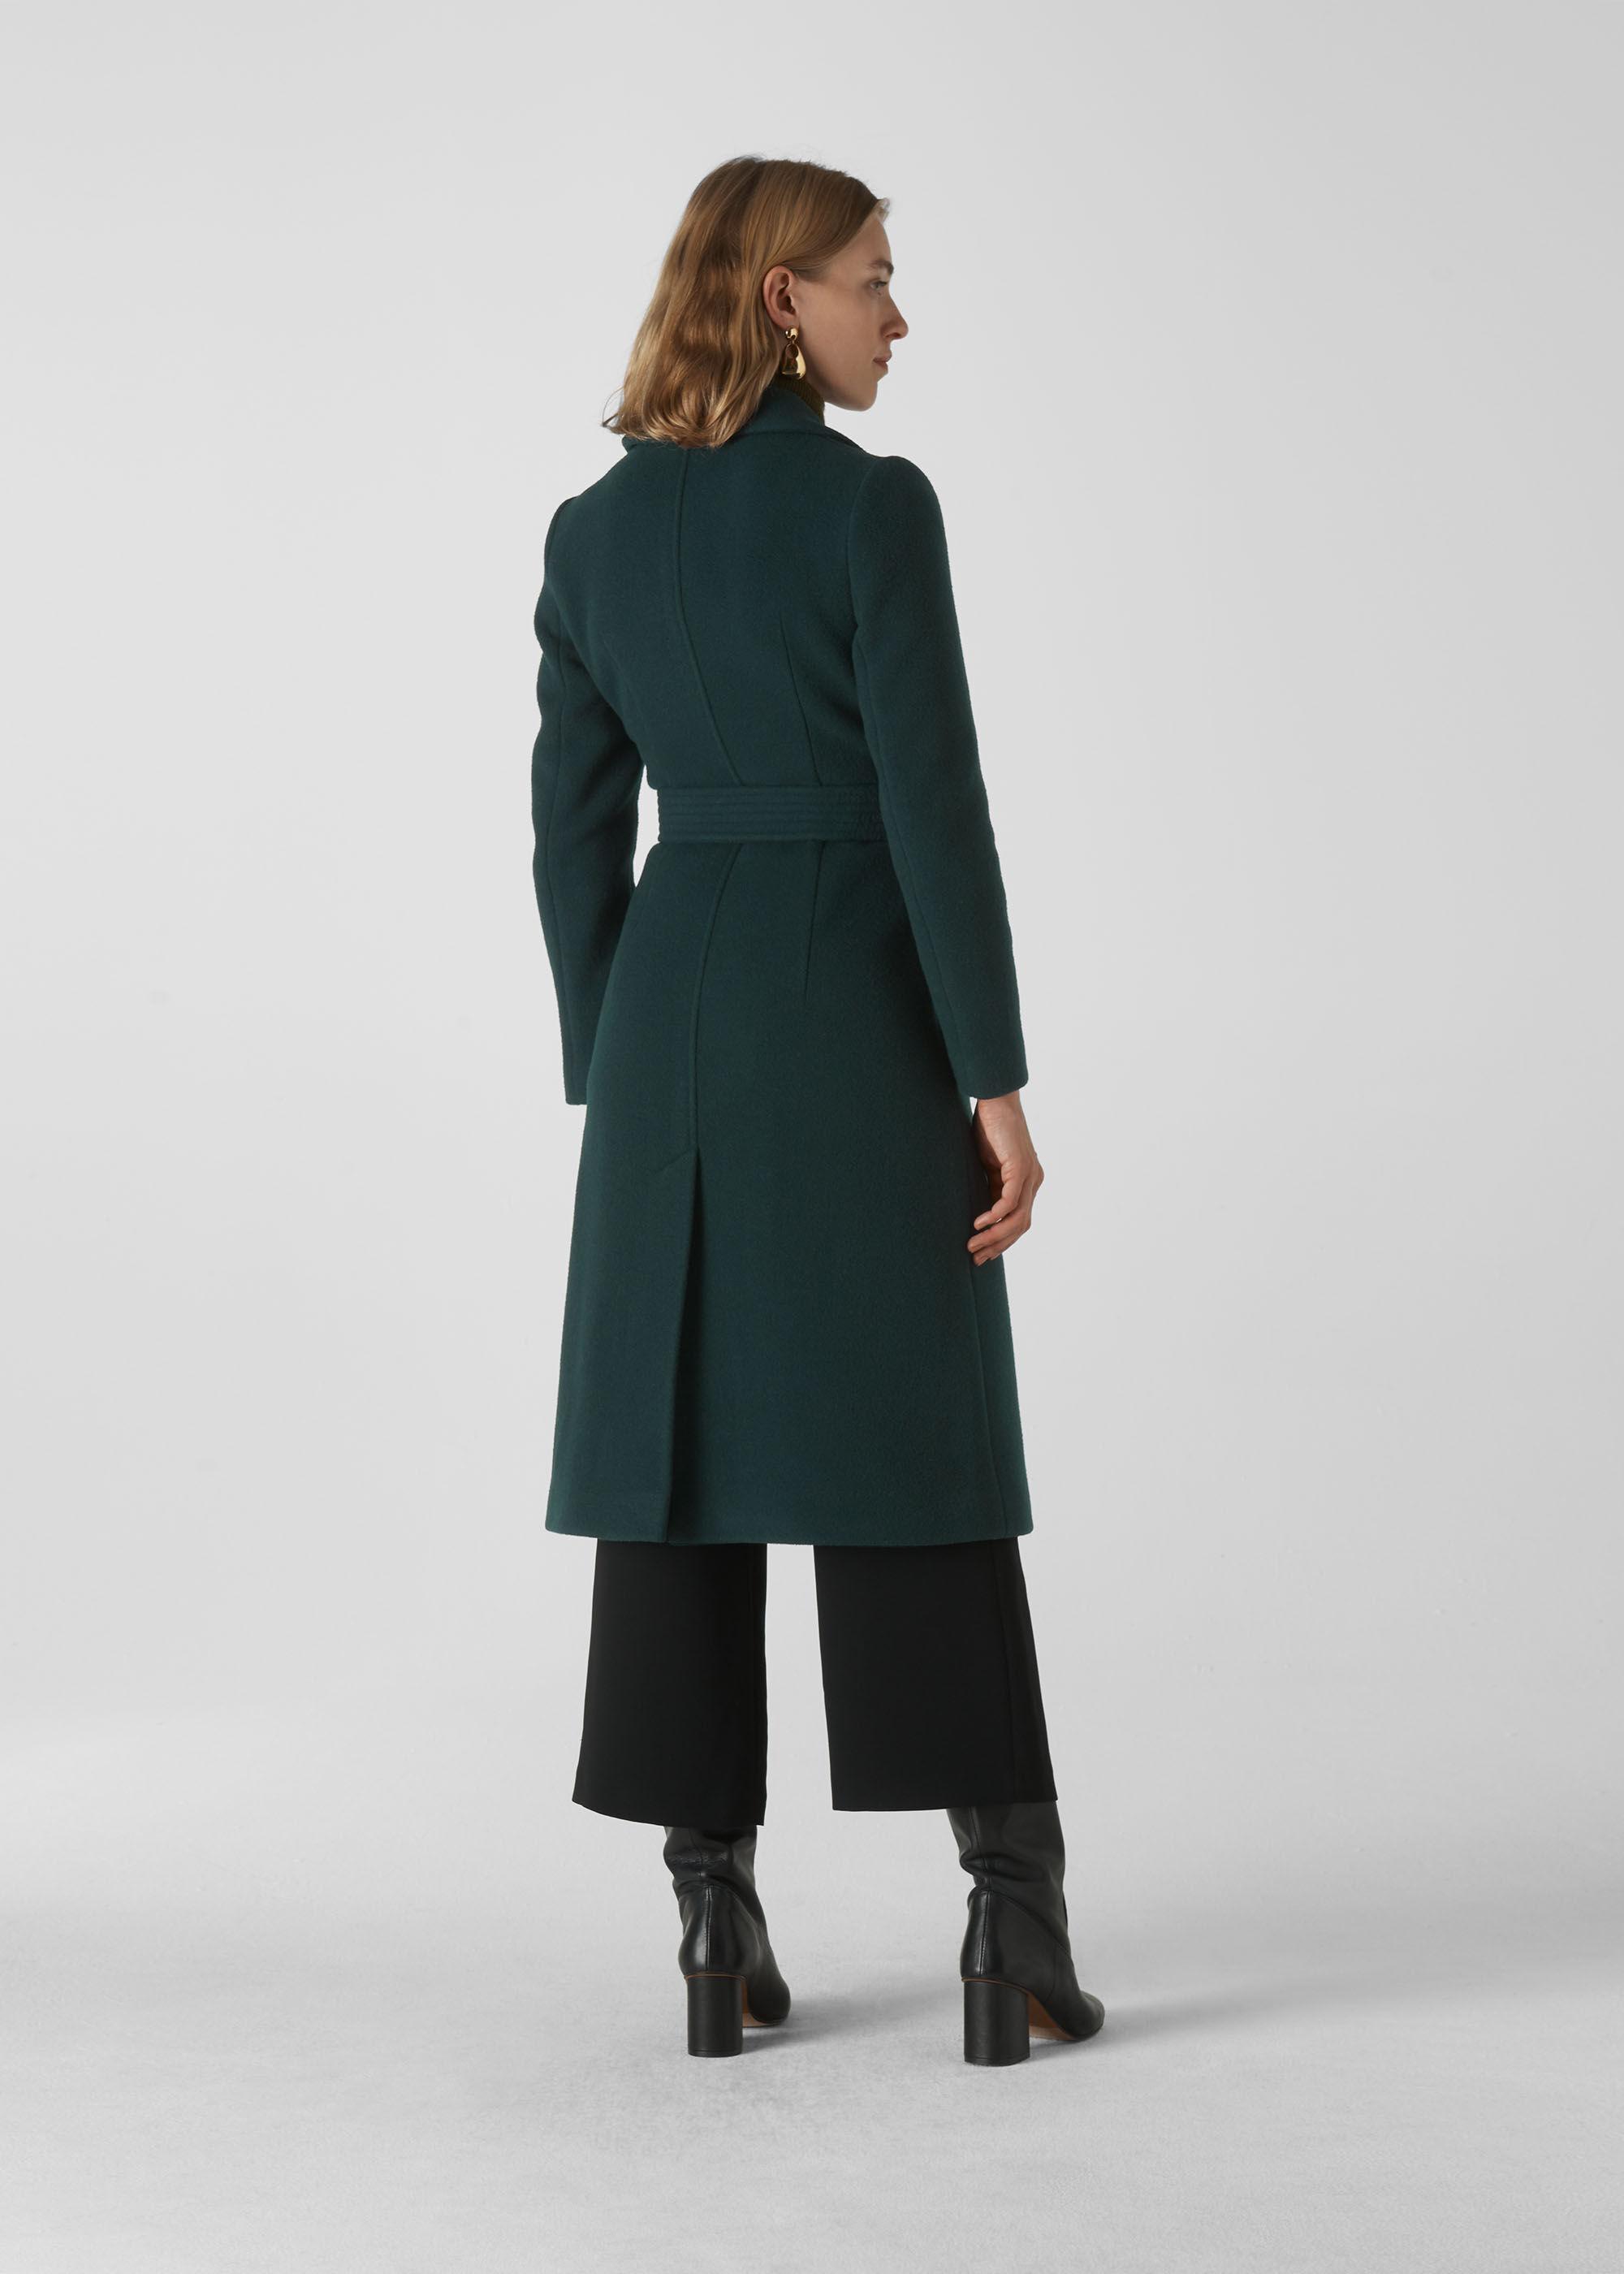 Whistles Wool Alexandra Belted Coat in Dark Green (Green) - Lyst